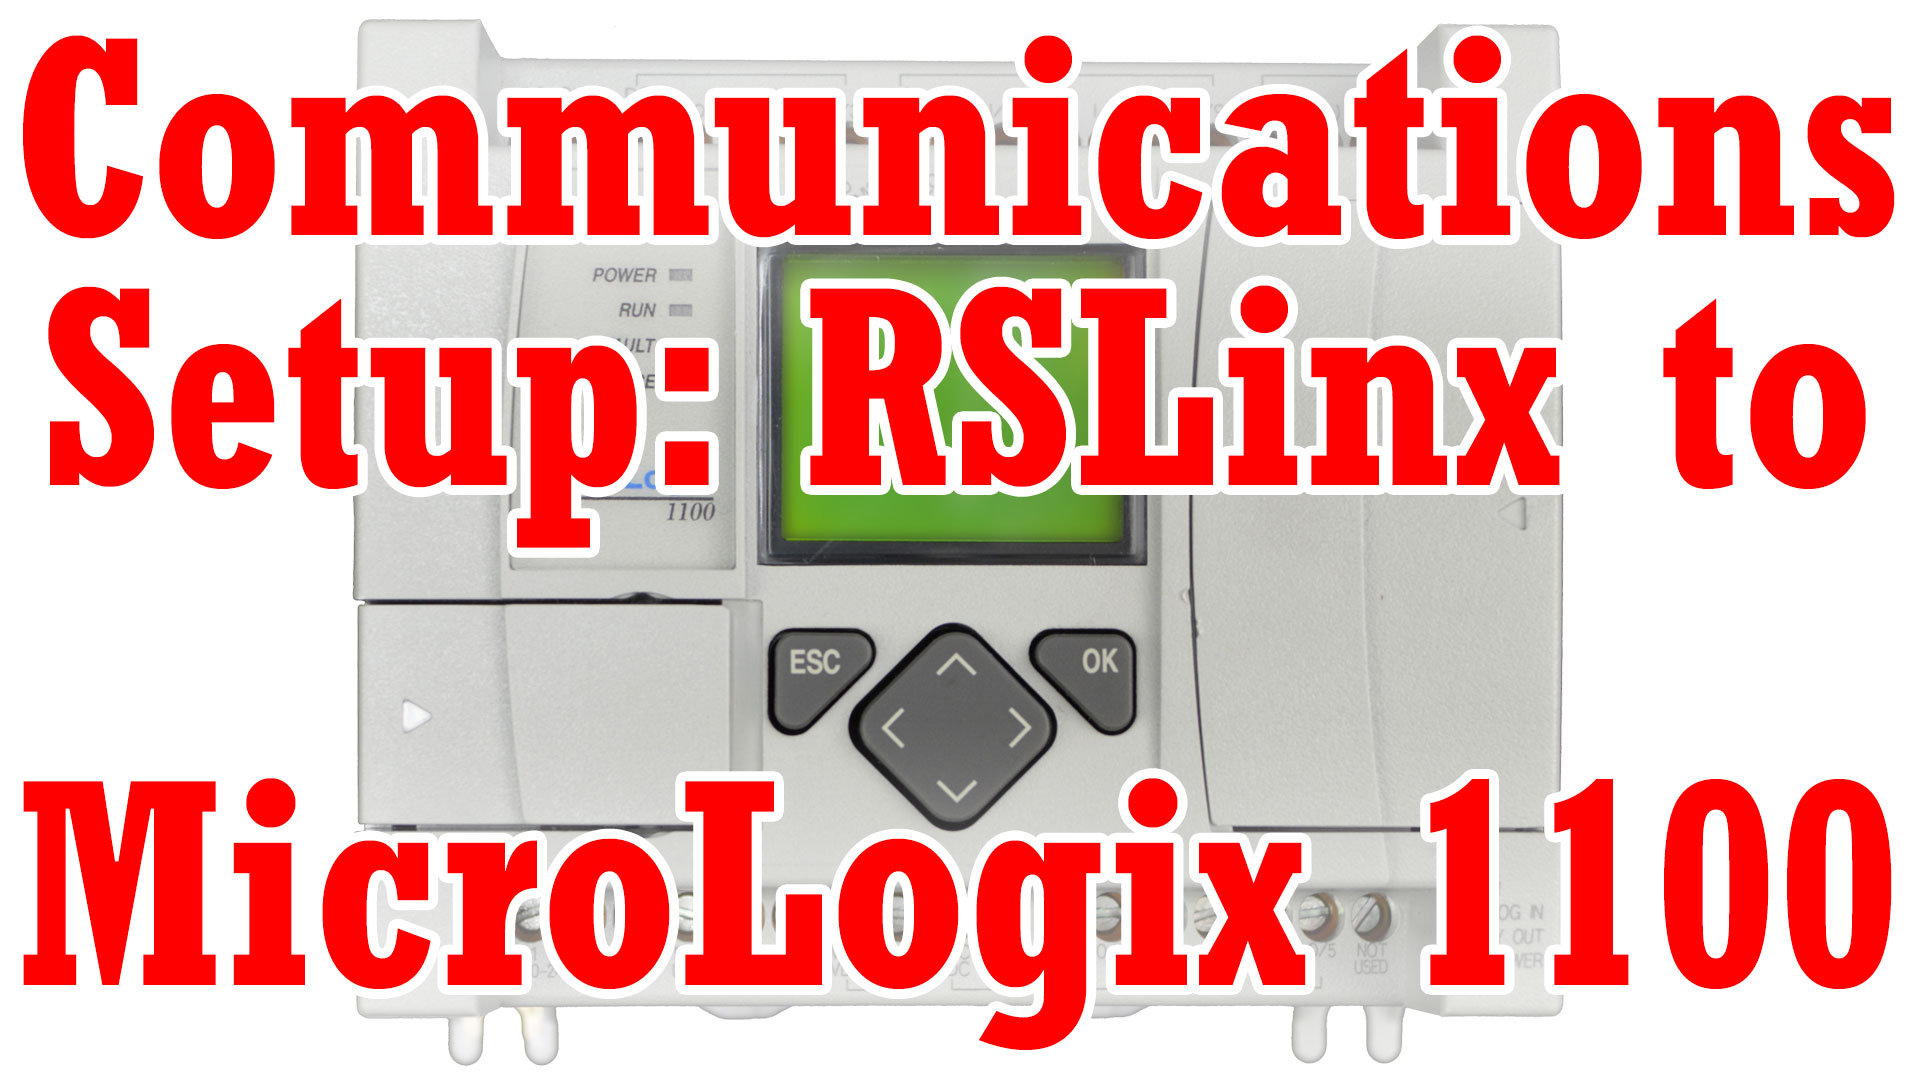 MicroLogix 1100, RSLinx Classic - Setup Communications and Download (M3E14)